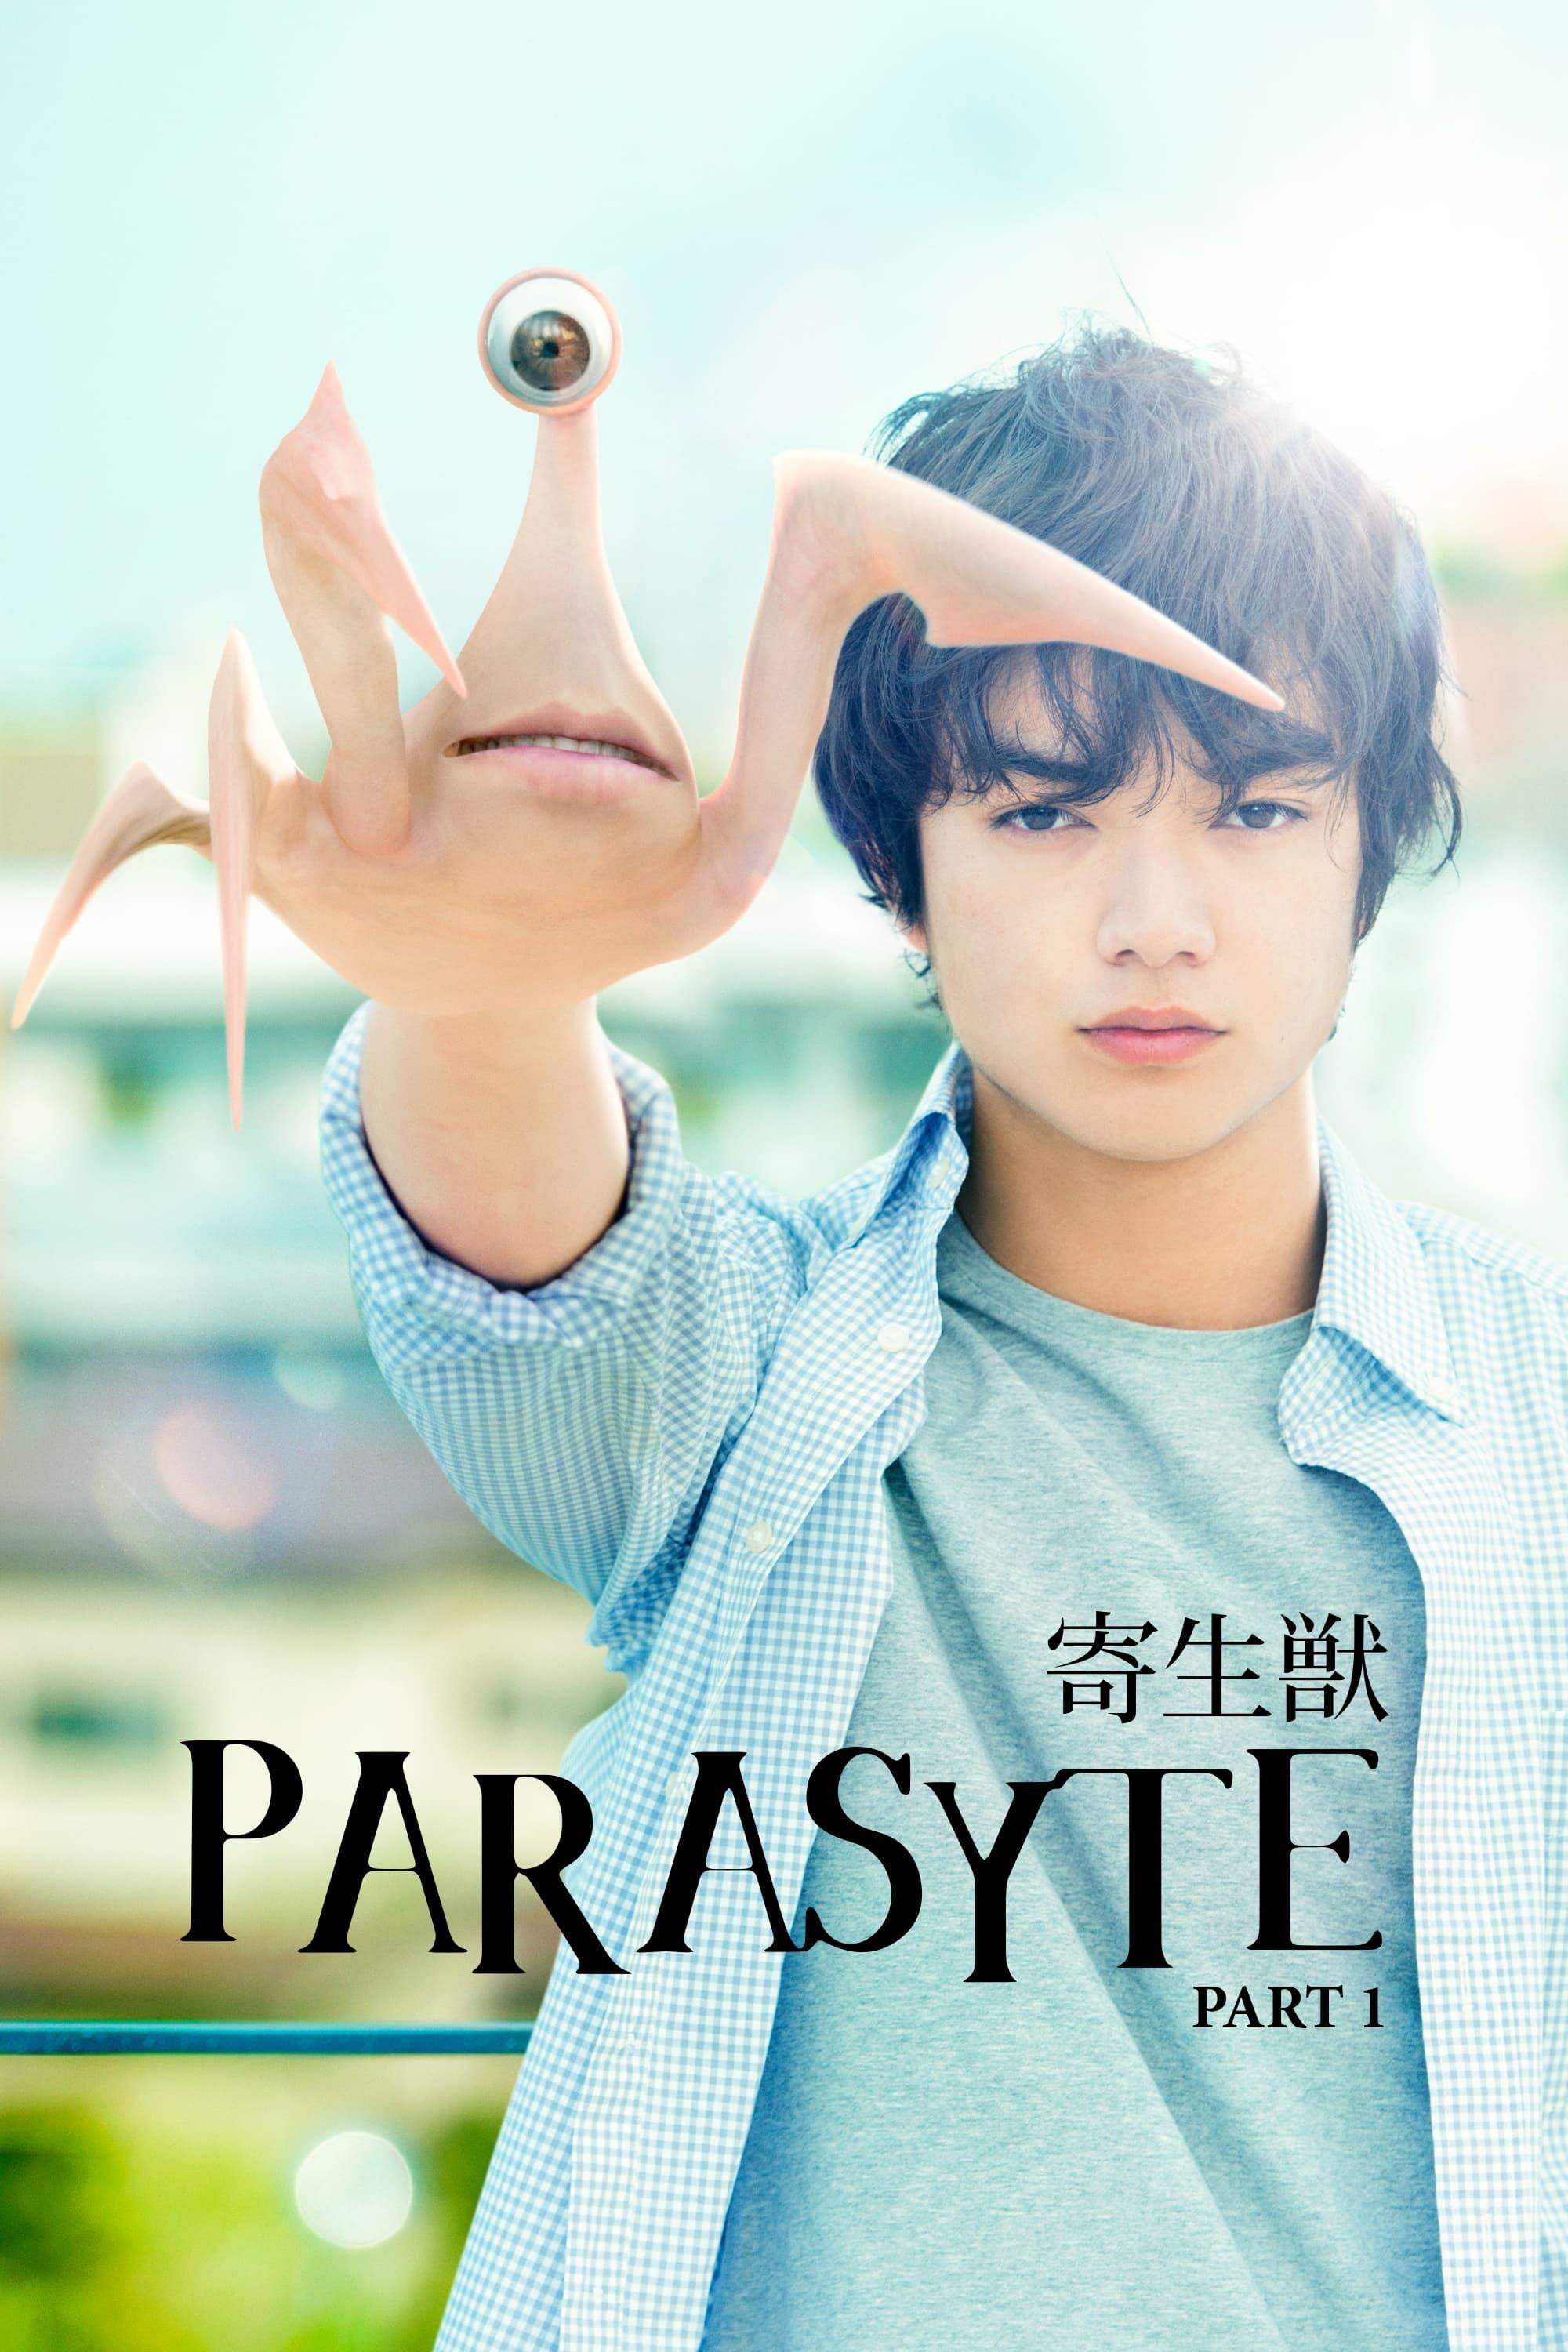 Parasyte: Part 1 poster